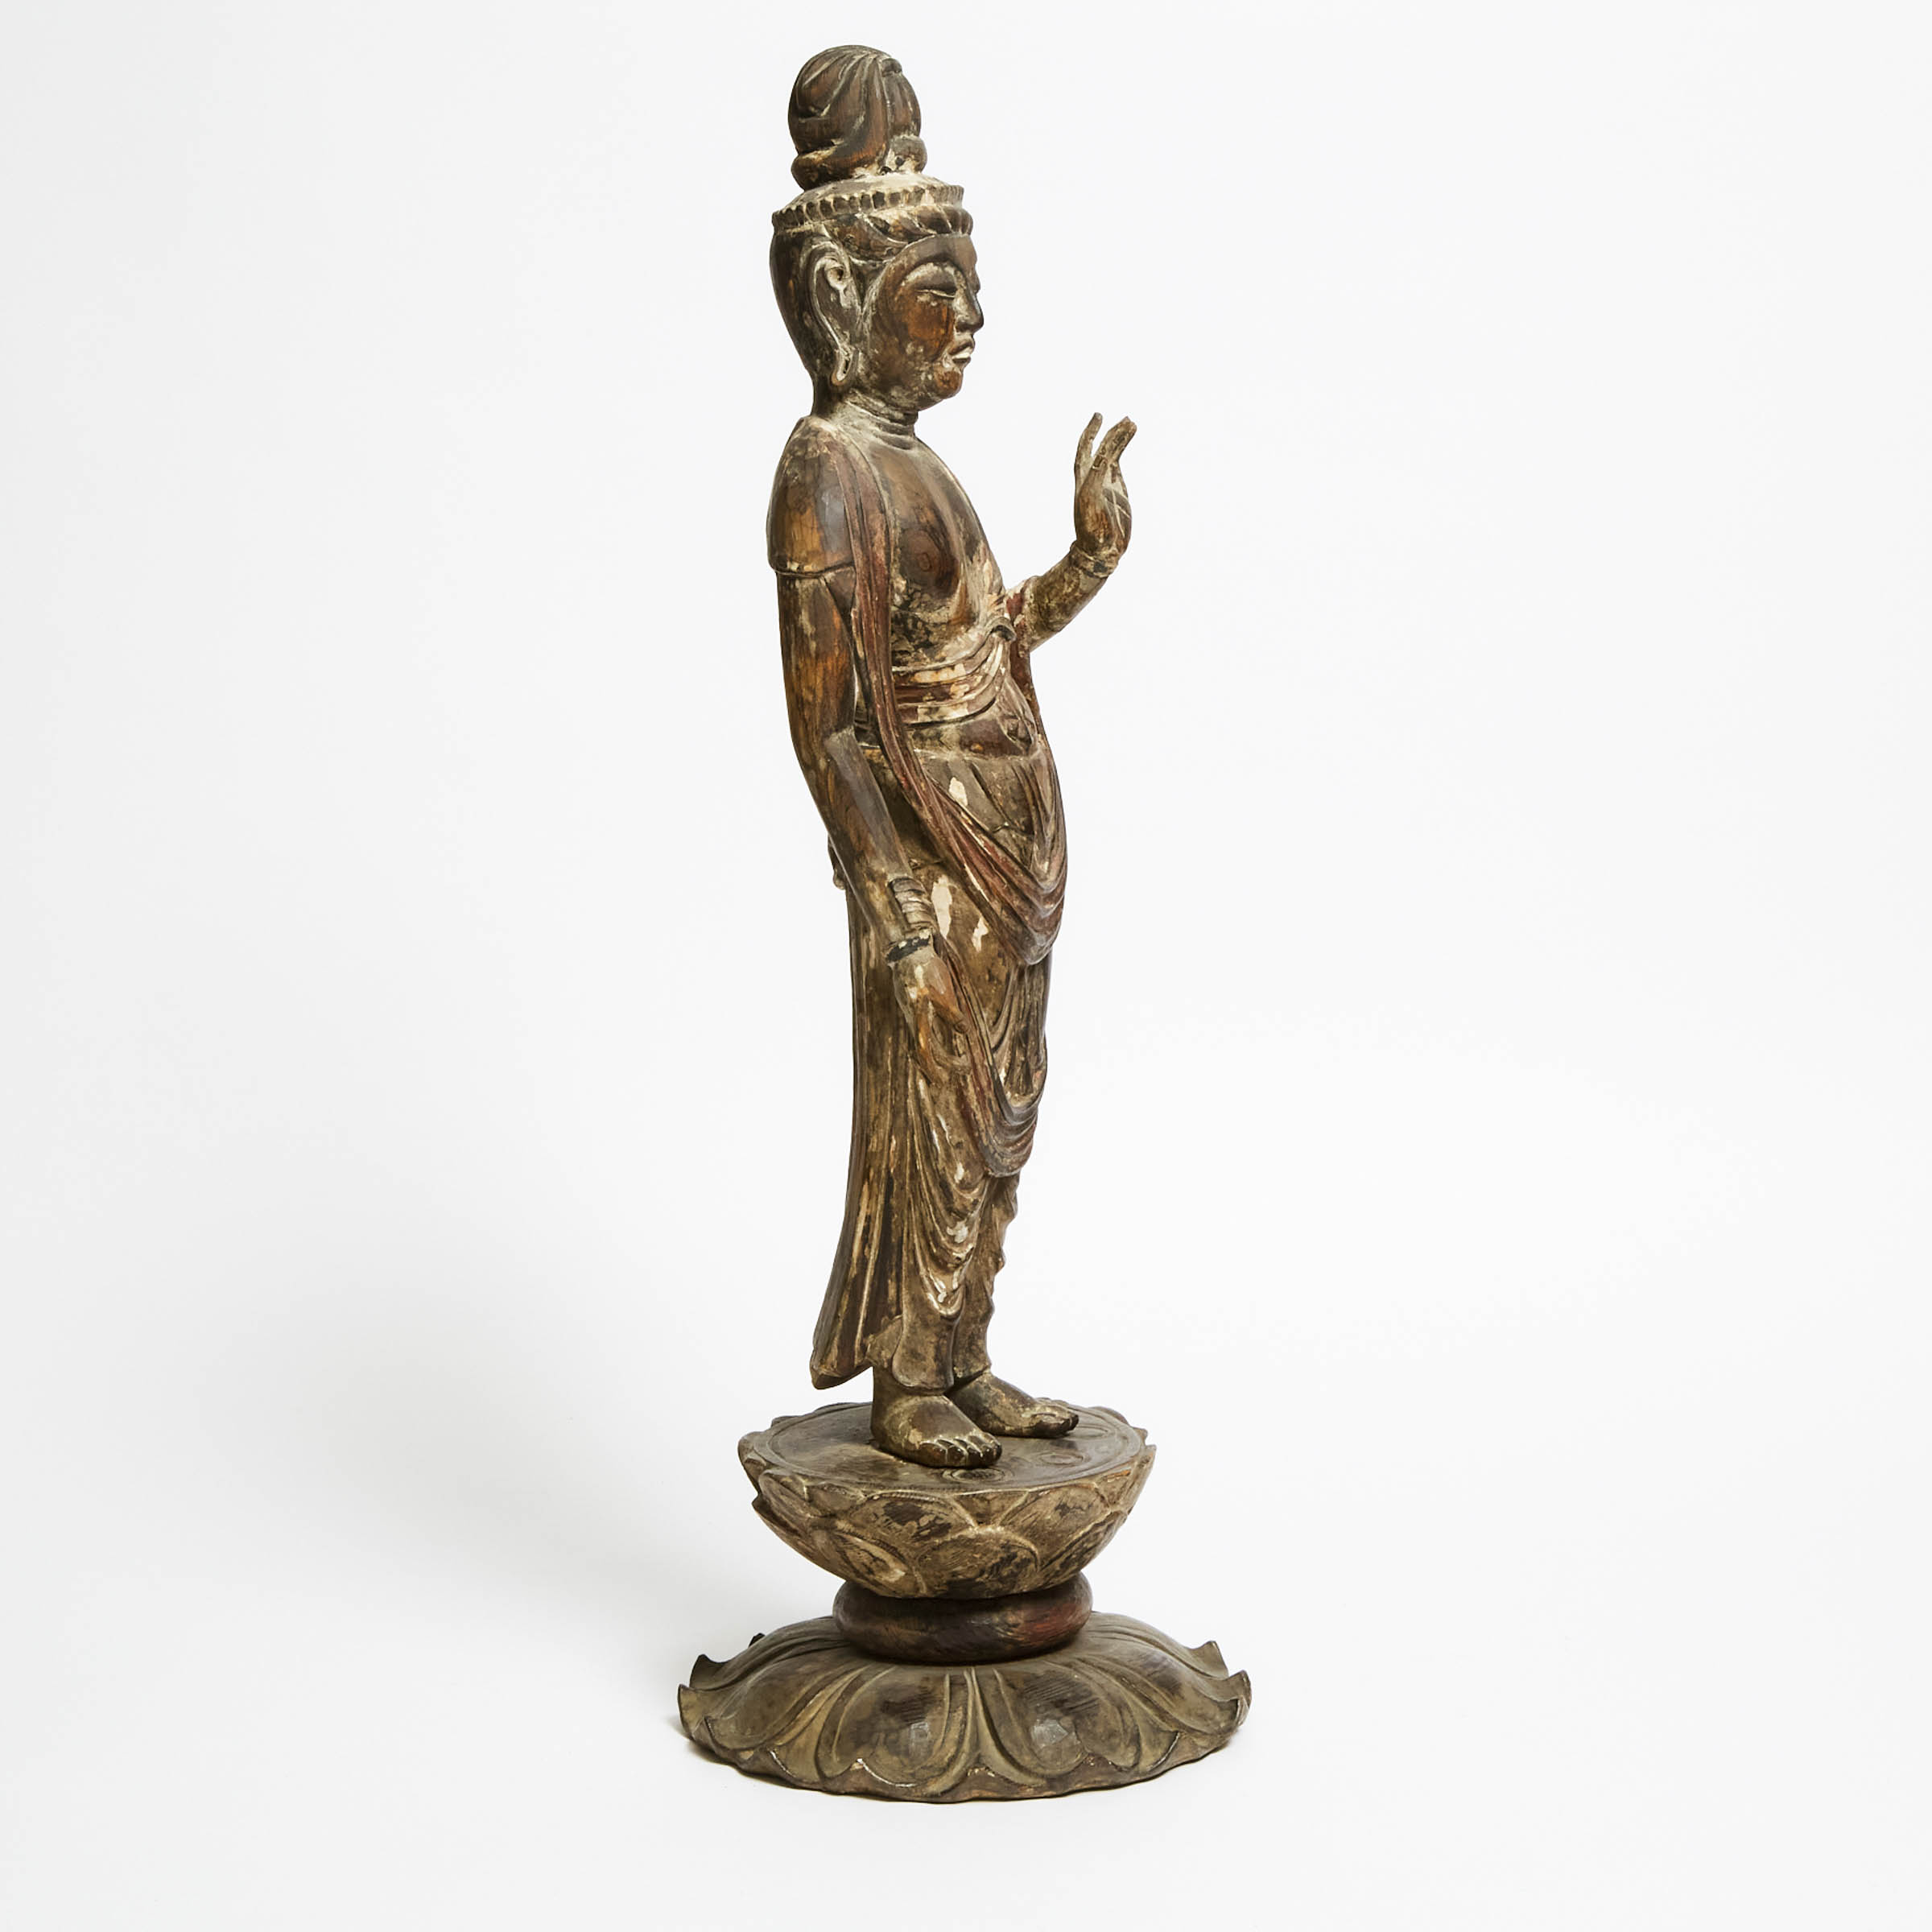 A Wood Standing Figure of Kannon (Avalokiteshvara), Possibly Edo/Meiji Period